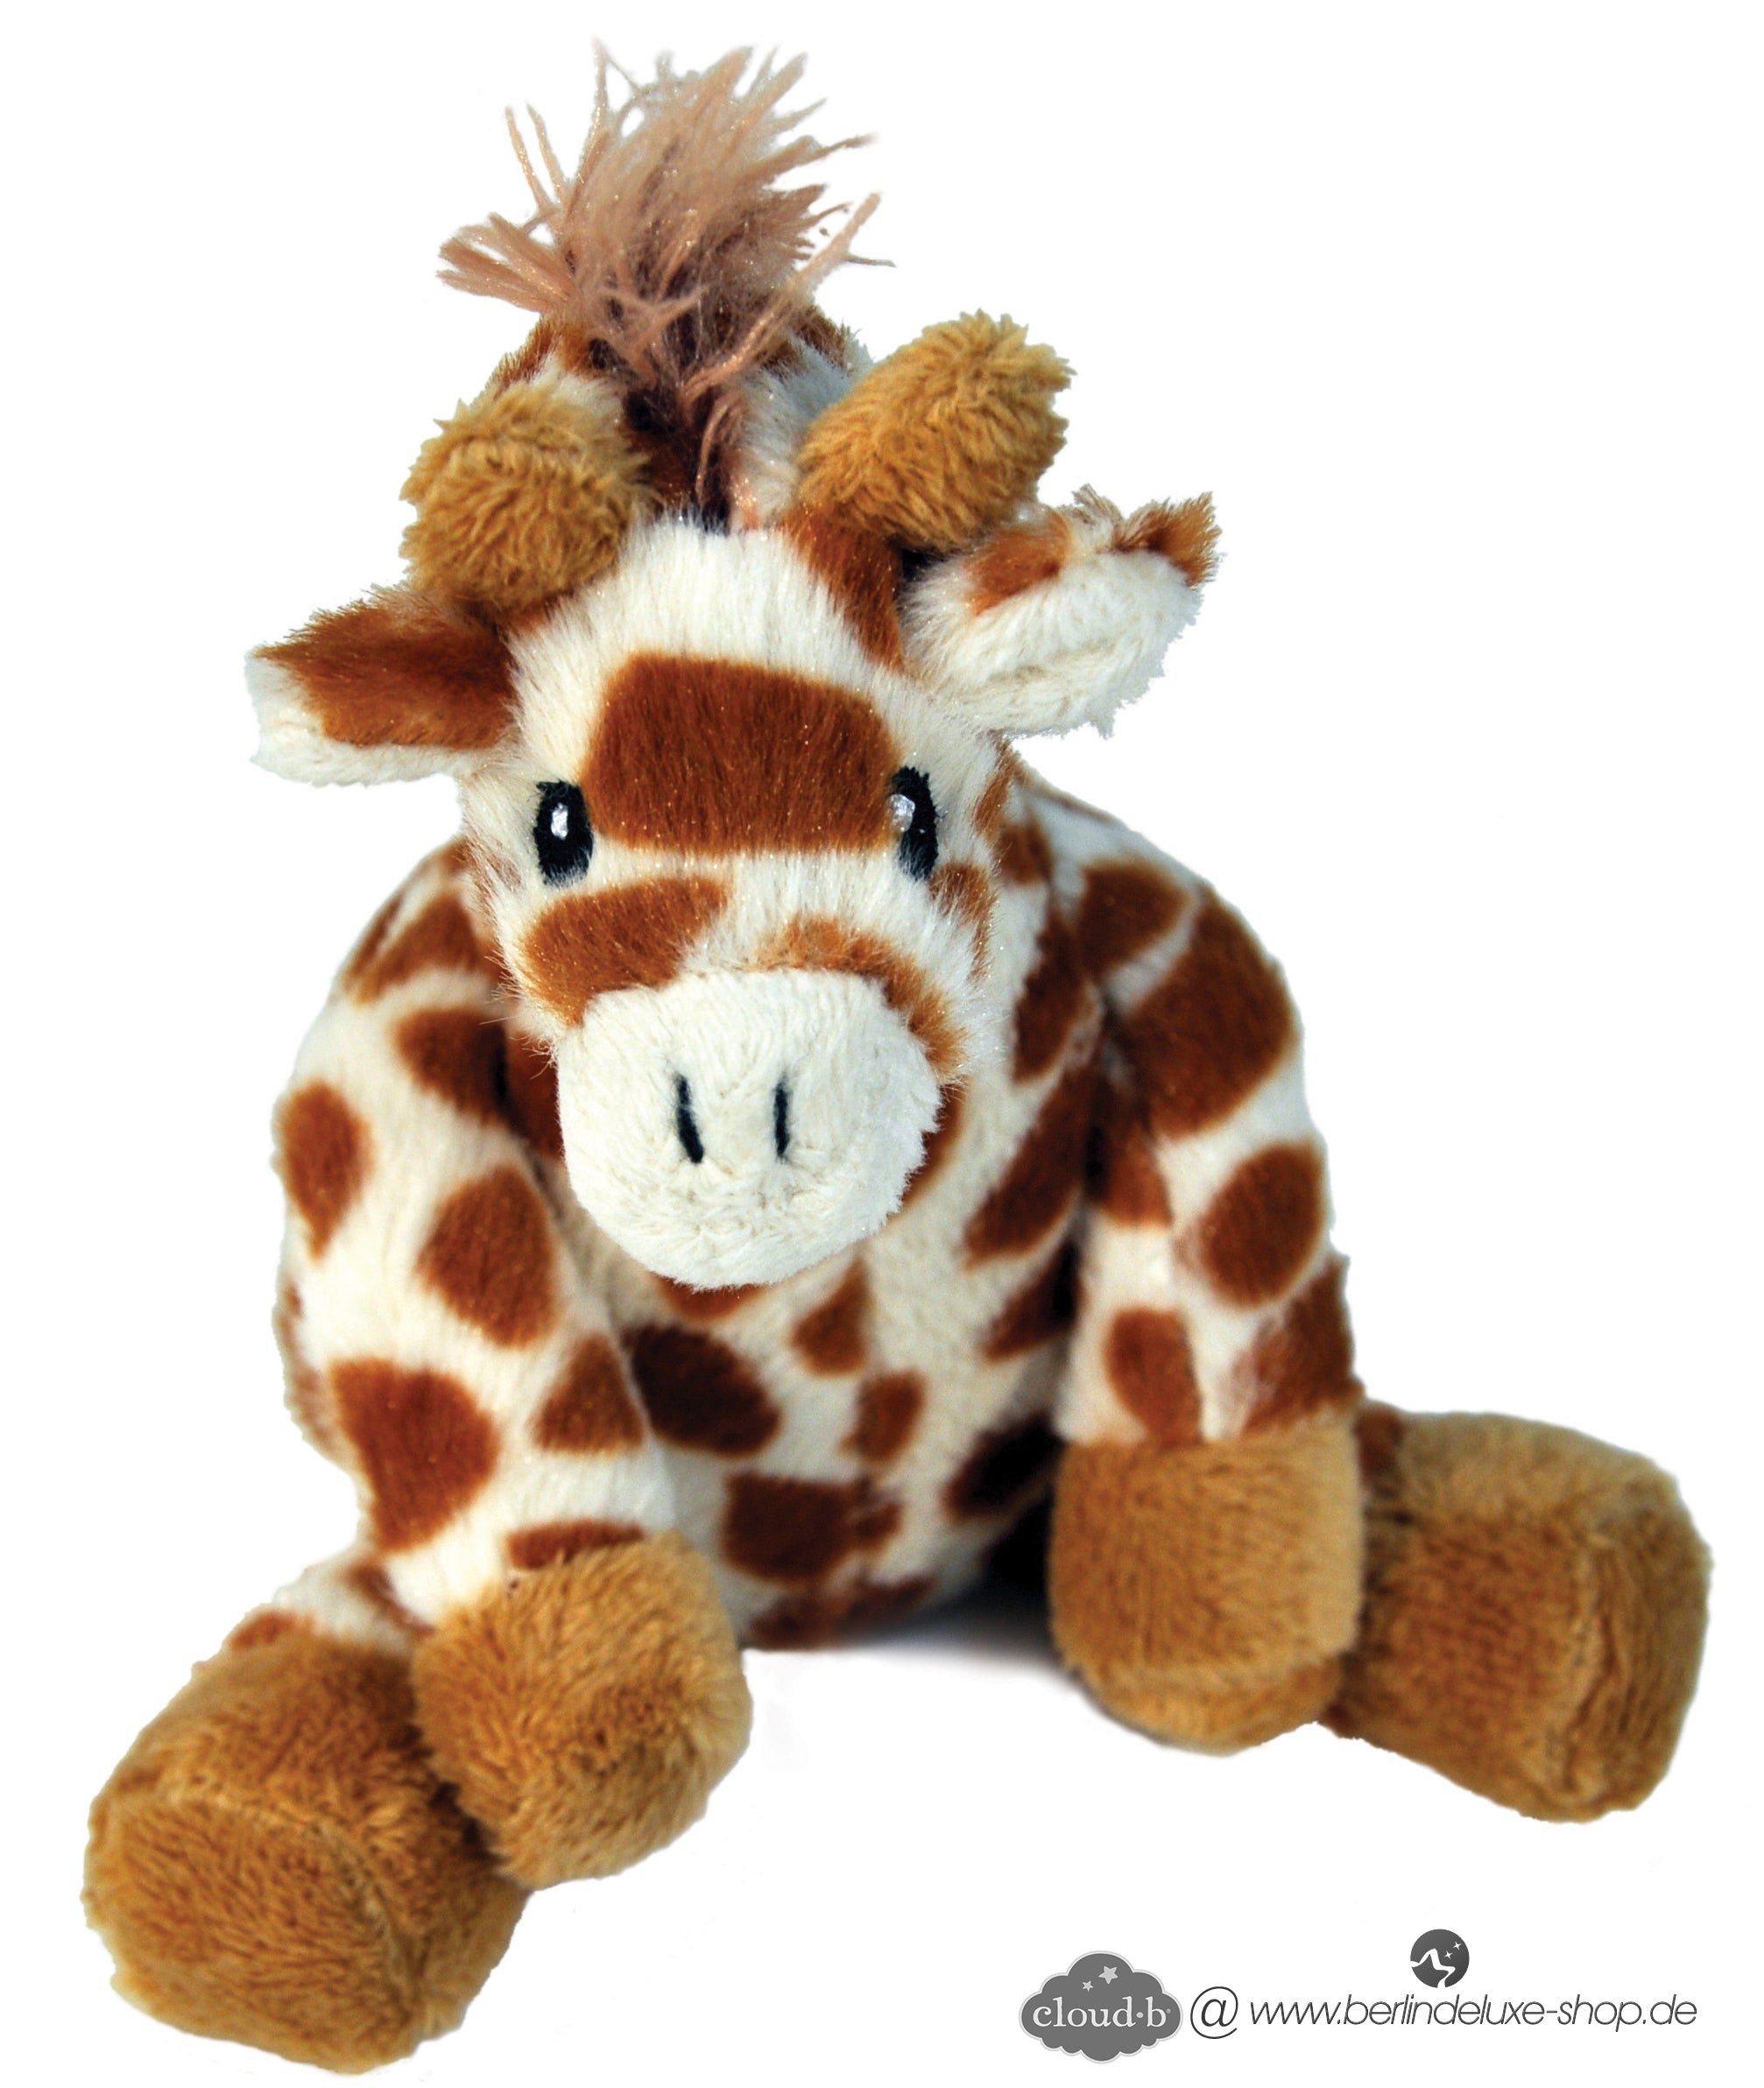 Gift set giraffe rattle